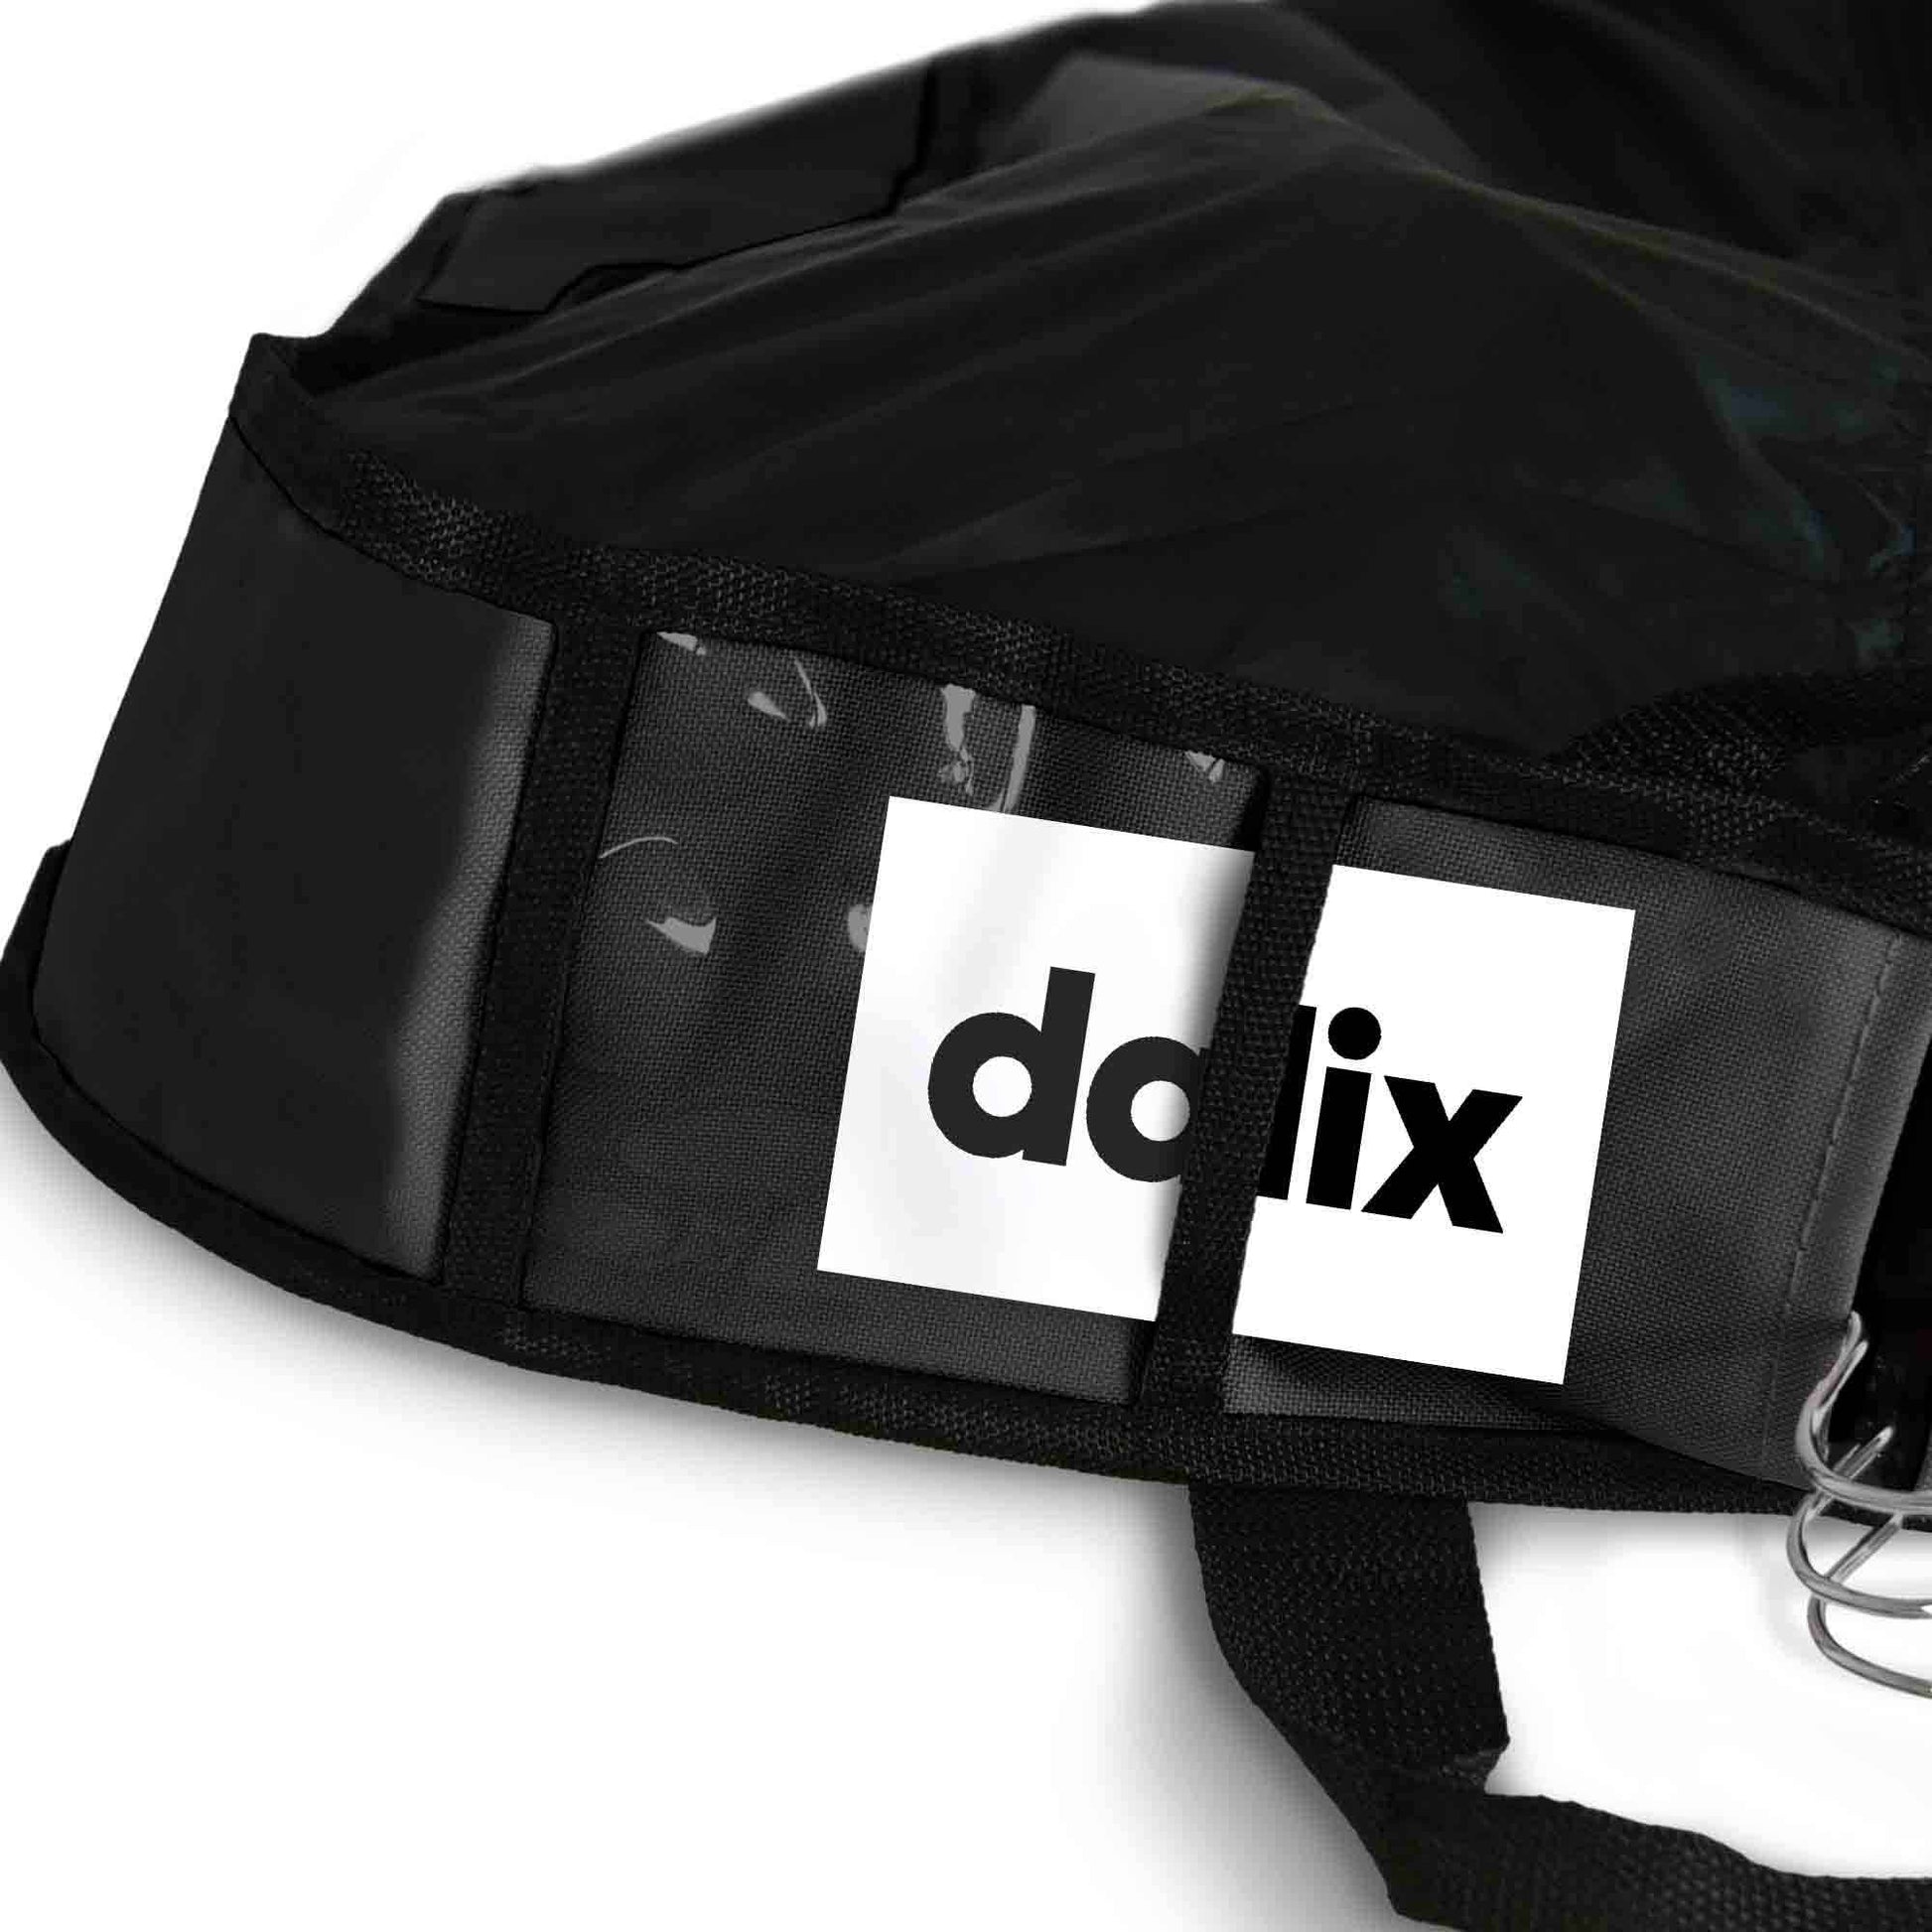 Dalix 39 Garment Bag Cover Suits Dresses Clothing Foldable Shoe Pocket in Navy Blue